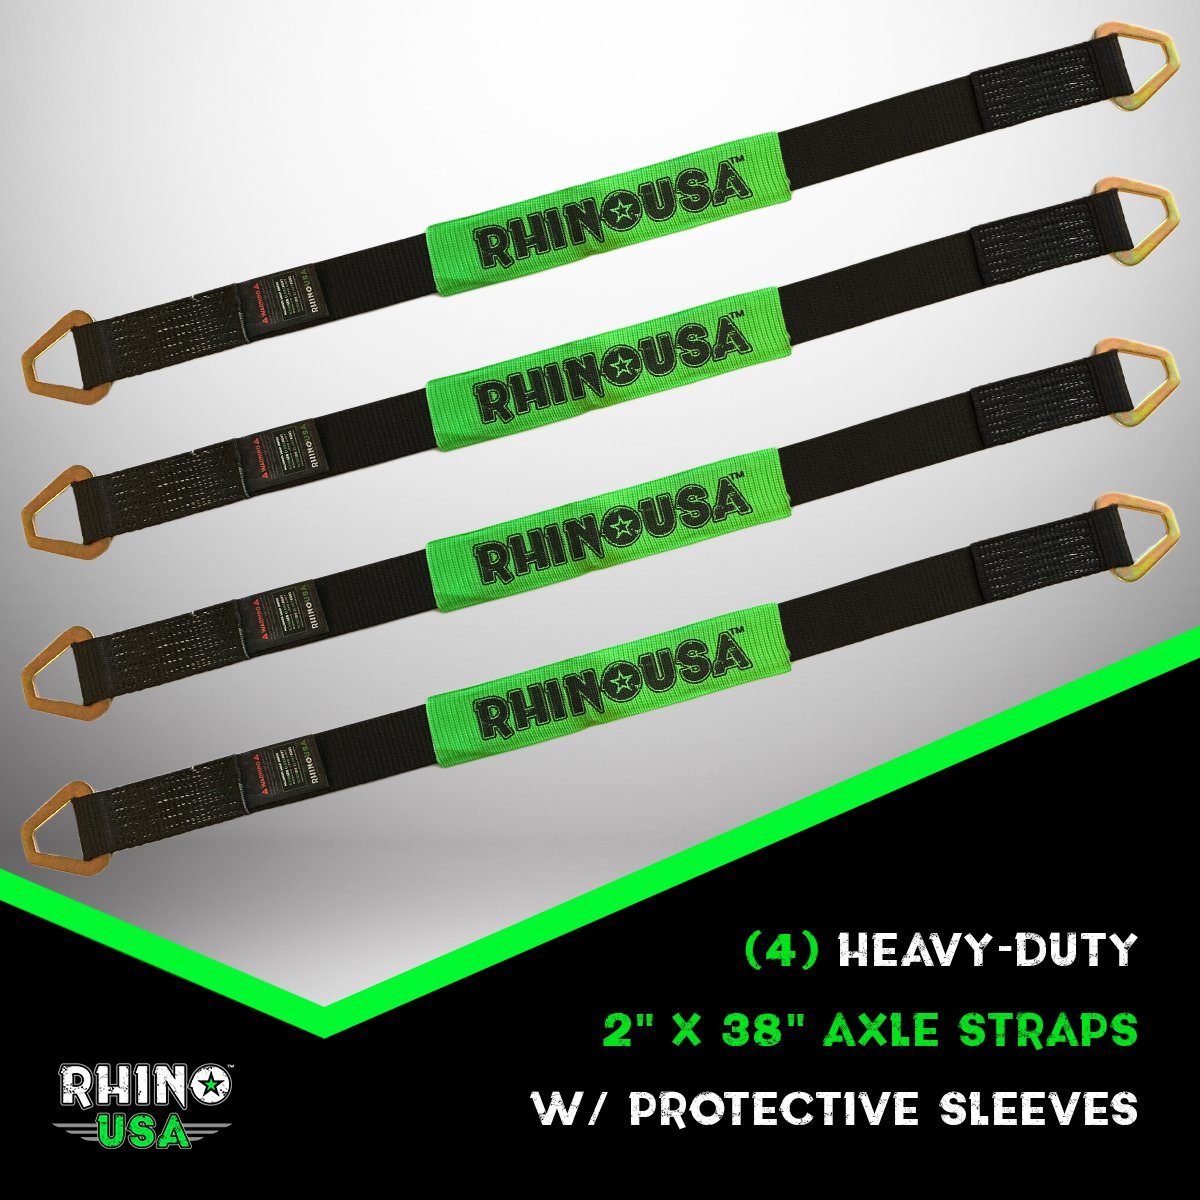 Best Axle Tie-Down Strap Set (2 x 38' 4-Pack) - Rhino USA